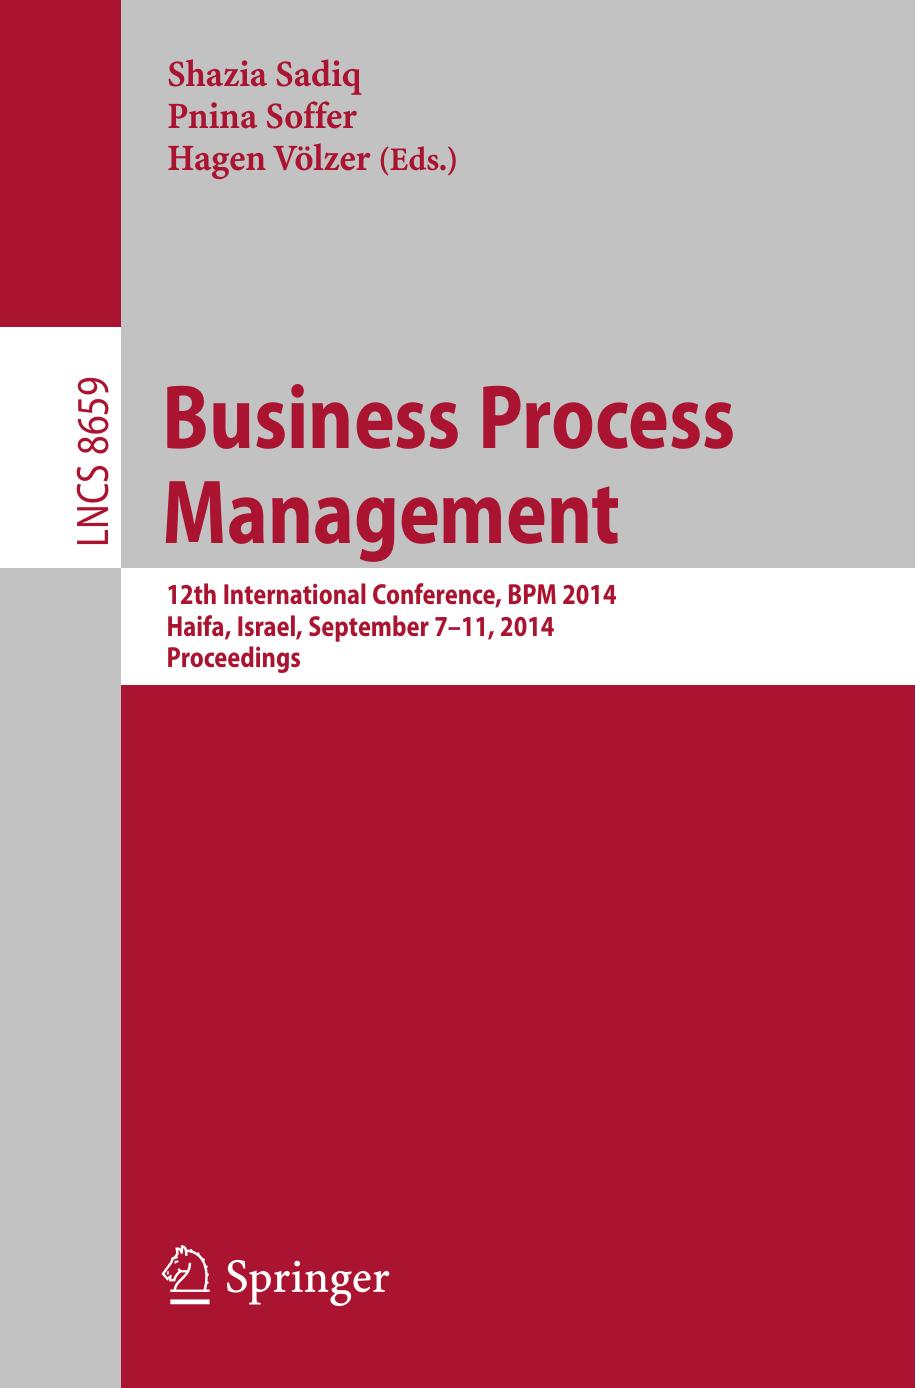 Business Process Management: 12th International Conference, BPM 2014, Haifa, Israel, September 7-11, 2014, Proceedings